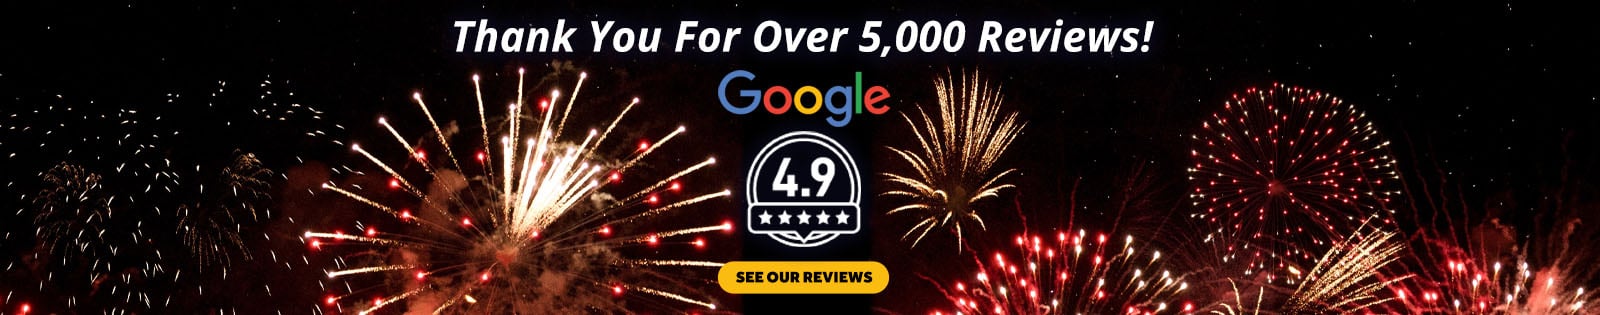 5000 Reviews